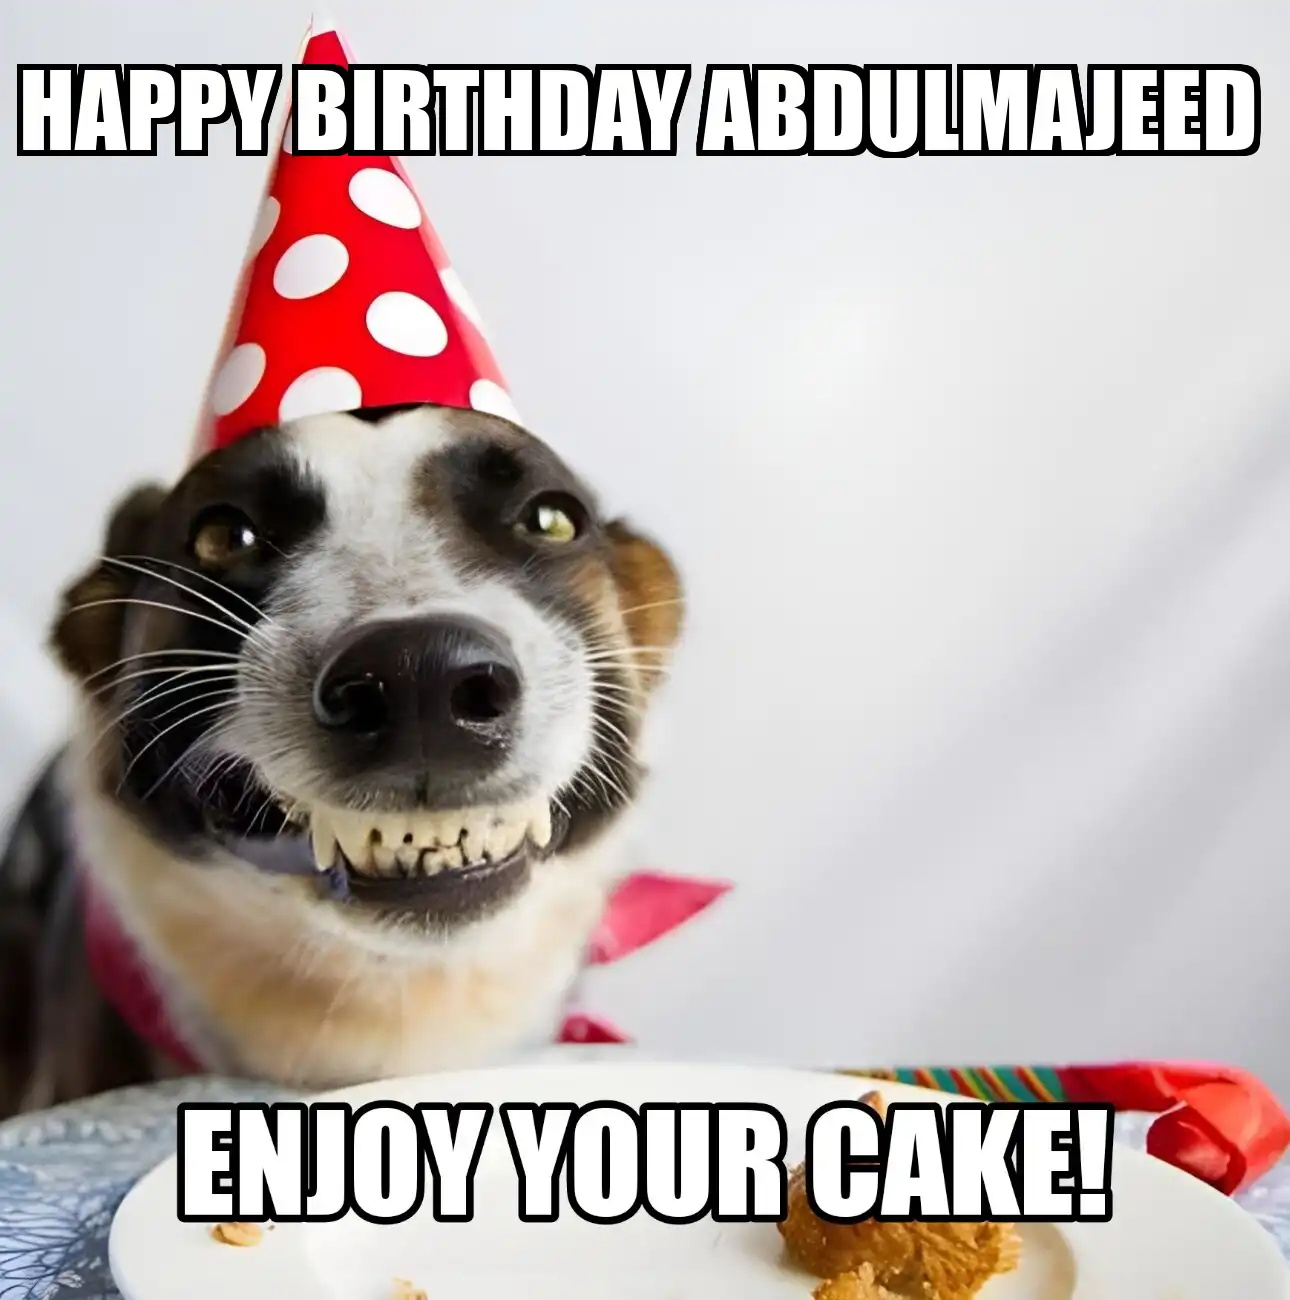 Happy Birthday Abdulmajeed Enjoy Your Cake Dog Meme